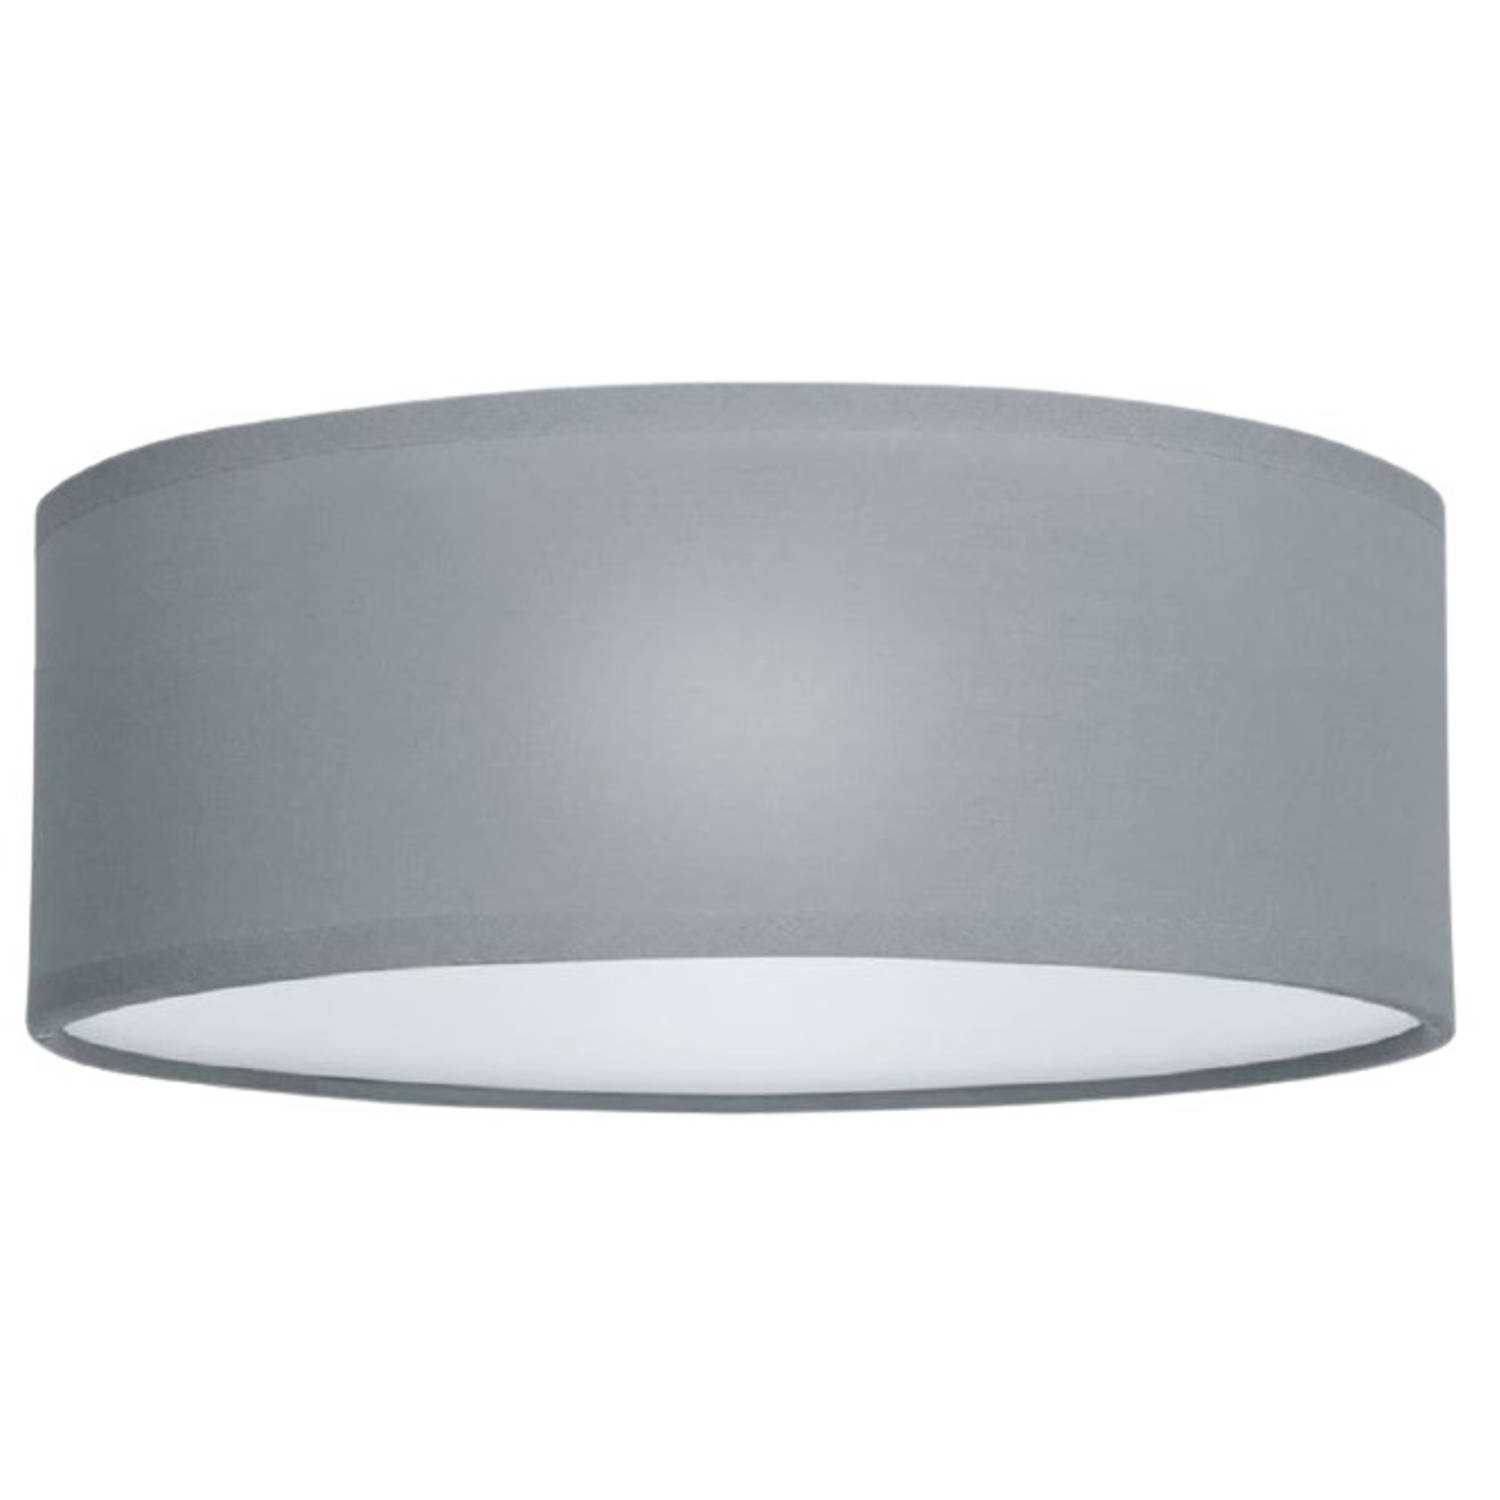 Smartwares plafondlamp Mia 30 cm 2x E14 staal/textiel grijs